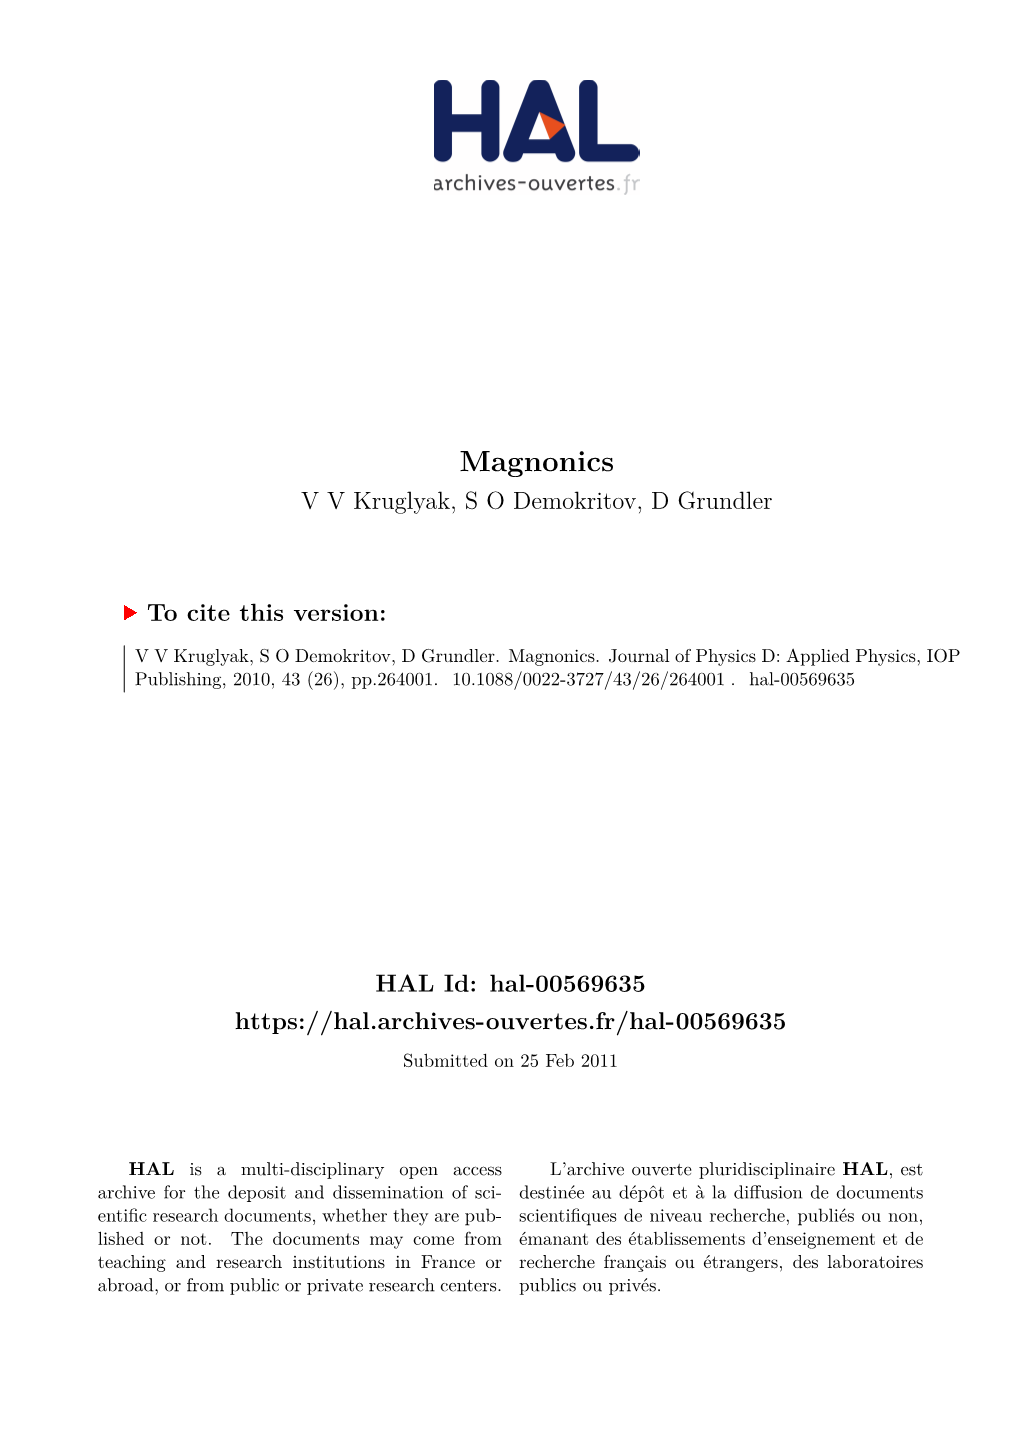 Magnonics V V Kruglyak, S O Demokritov, D Grundler